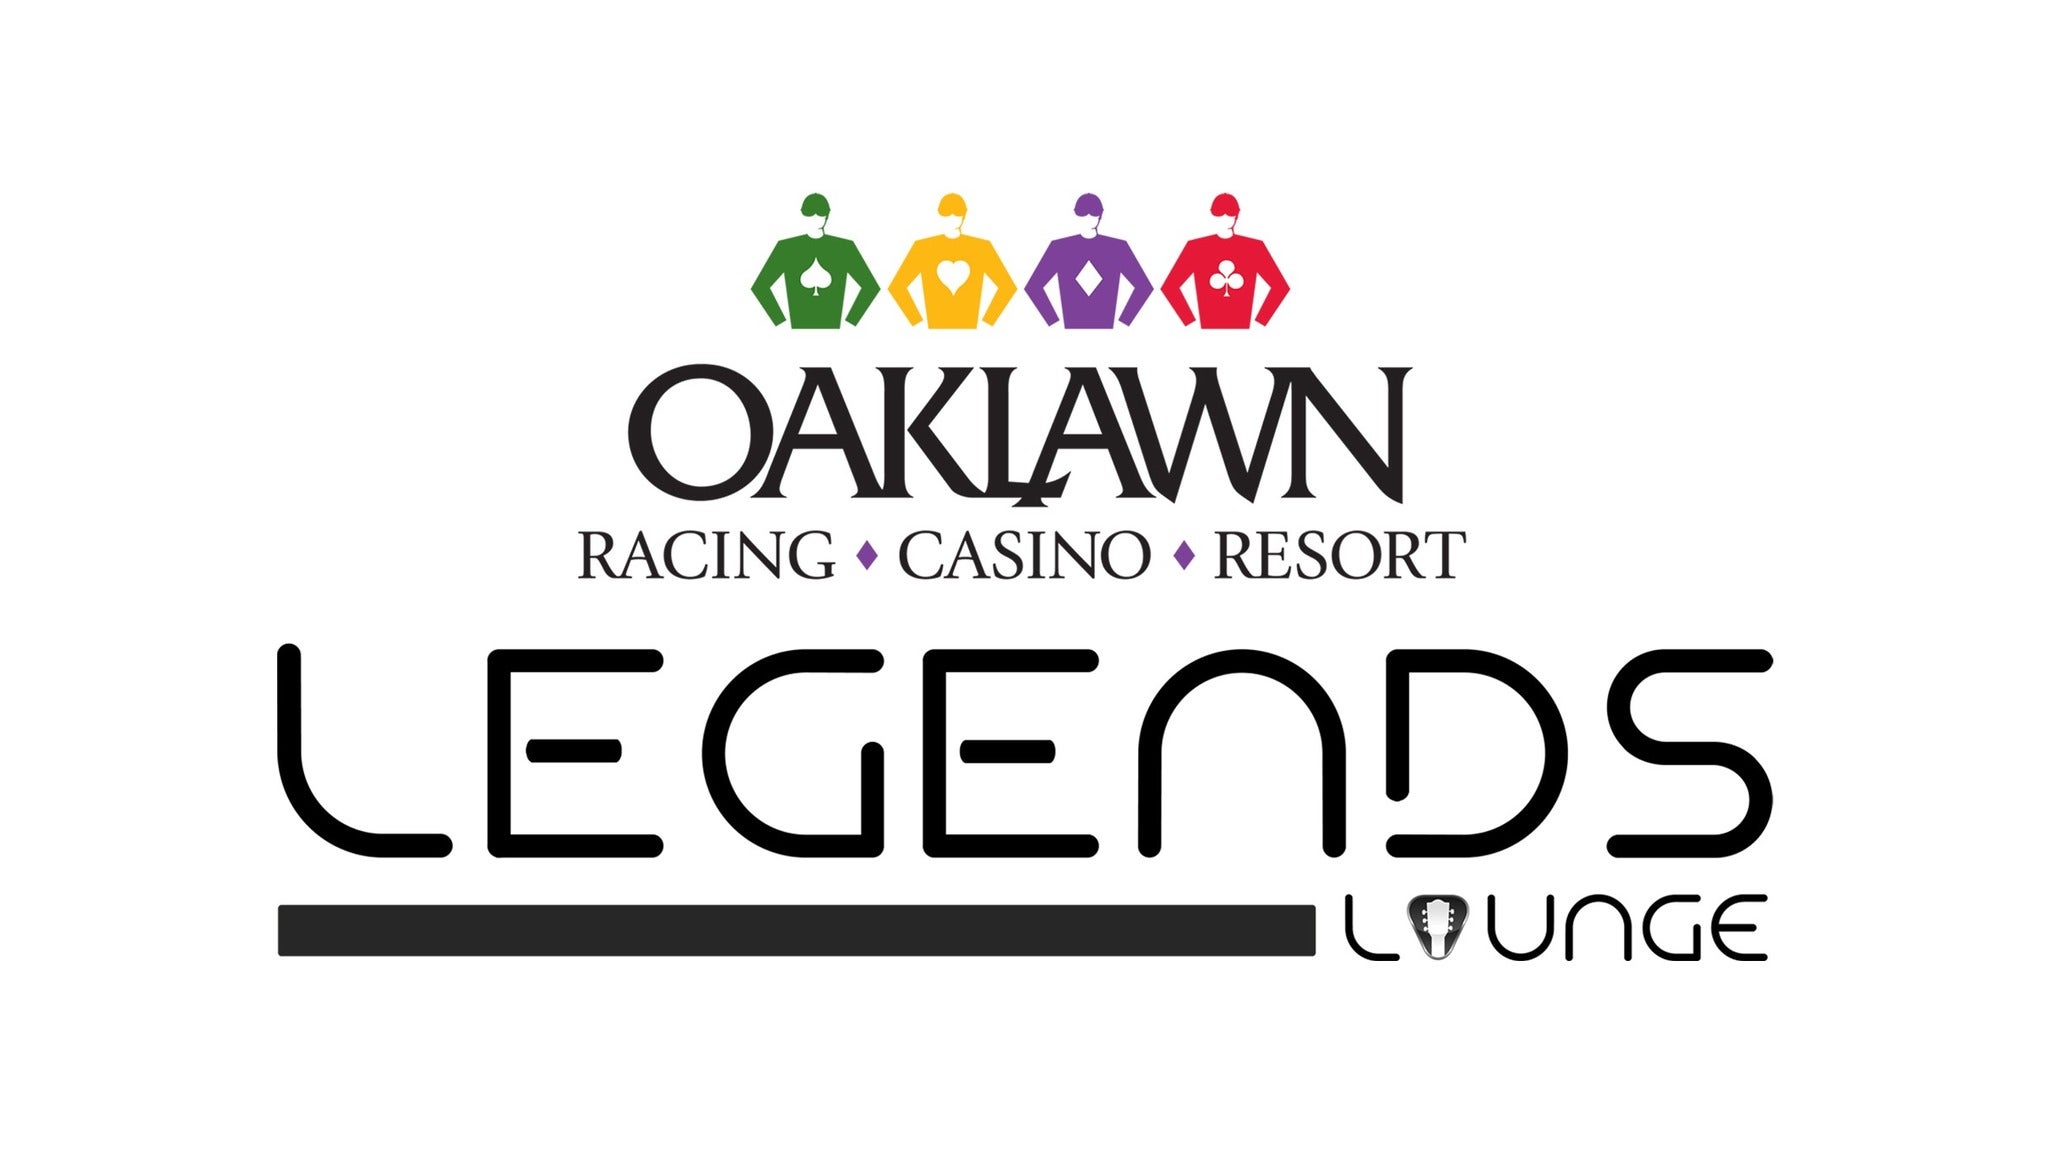 Oaklawn Legends Lounge Tickets Event Dates & Schedule